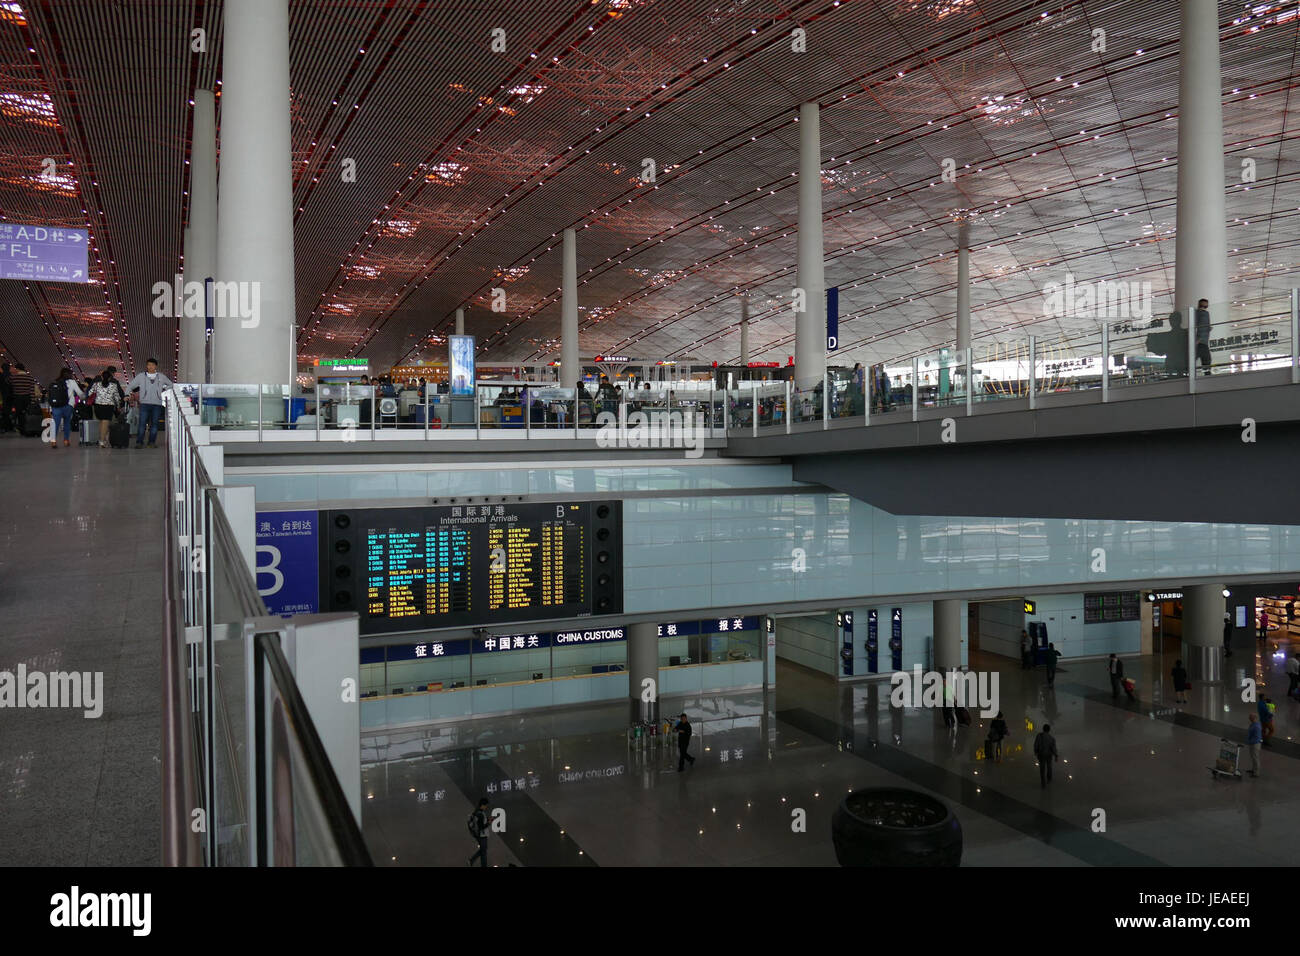 Прилет аэропорт пекин. Пекинский аэропорт терминал 3. Beijing Capital Airport 1 Terminal. Beijing Capital Airport , Terminal 2. Аэропорт Пекина панорама.